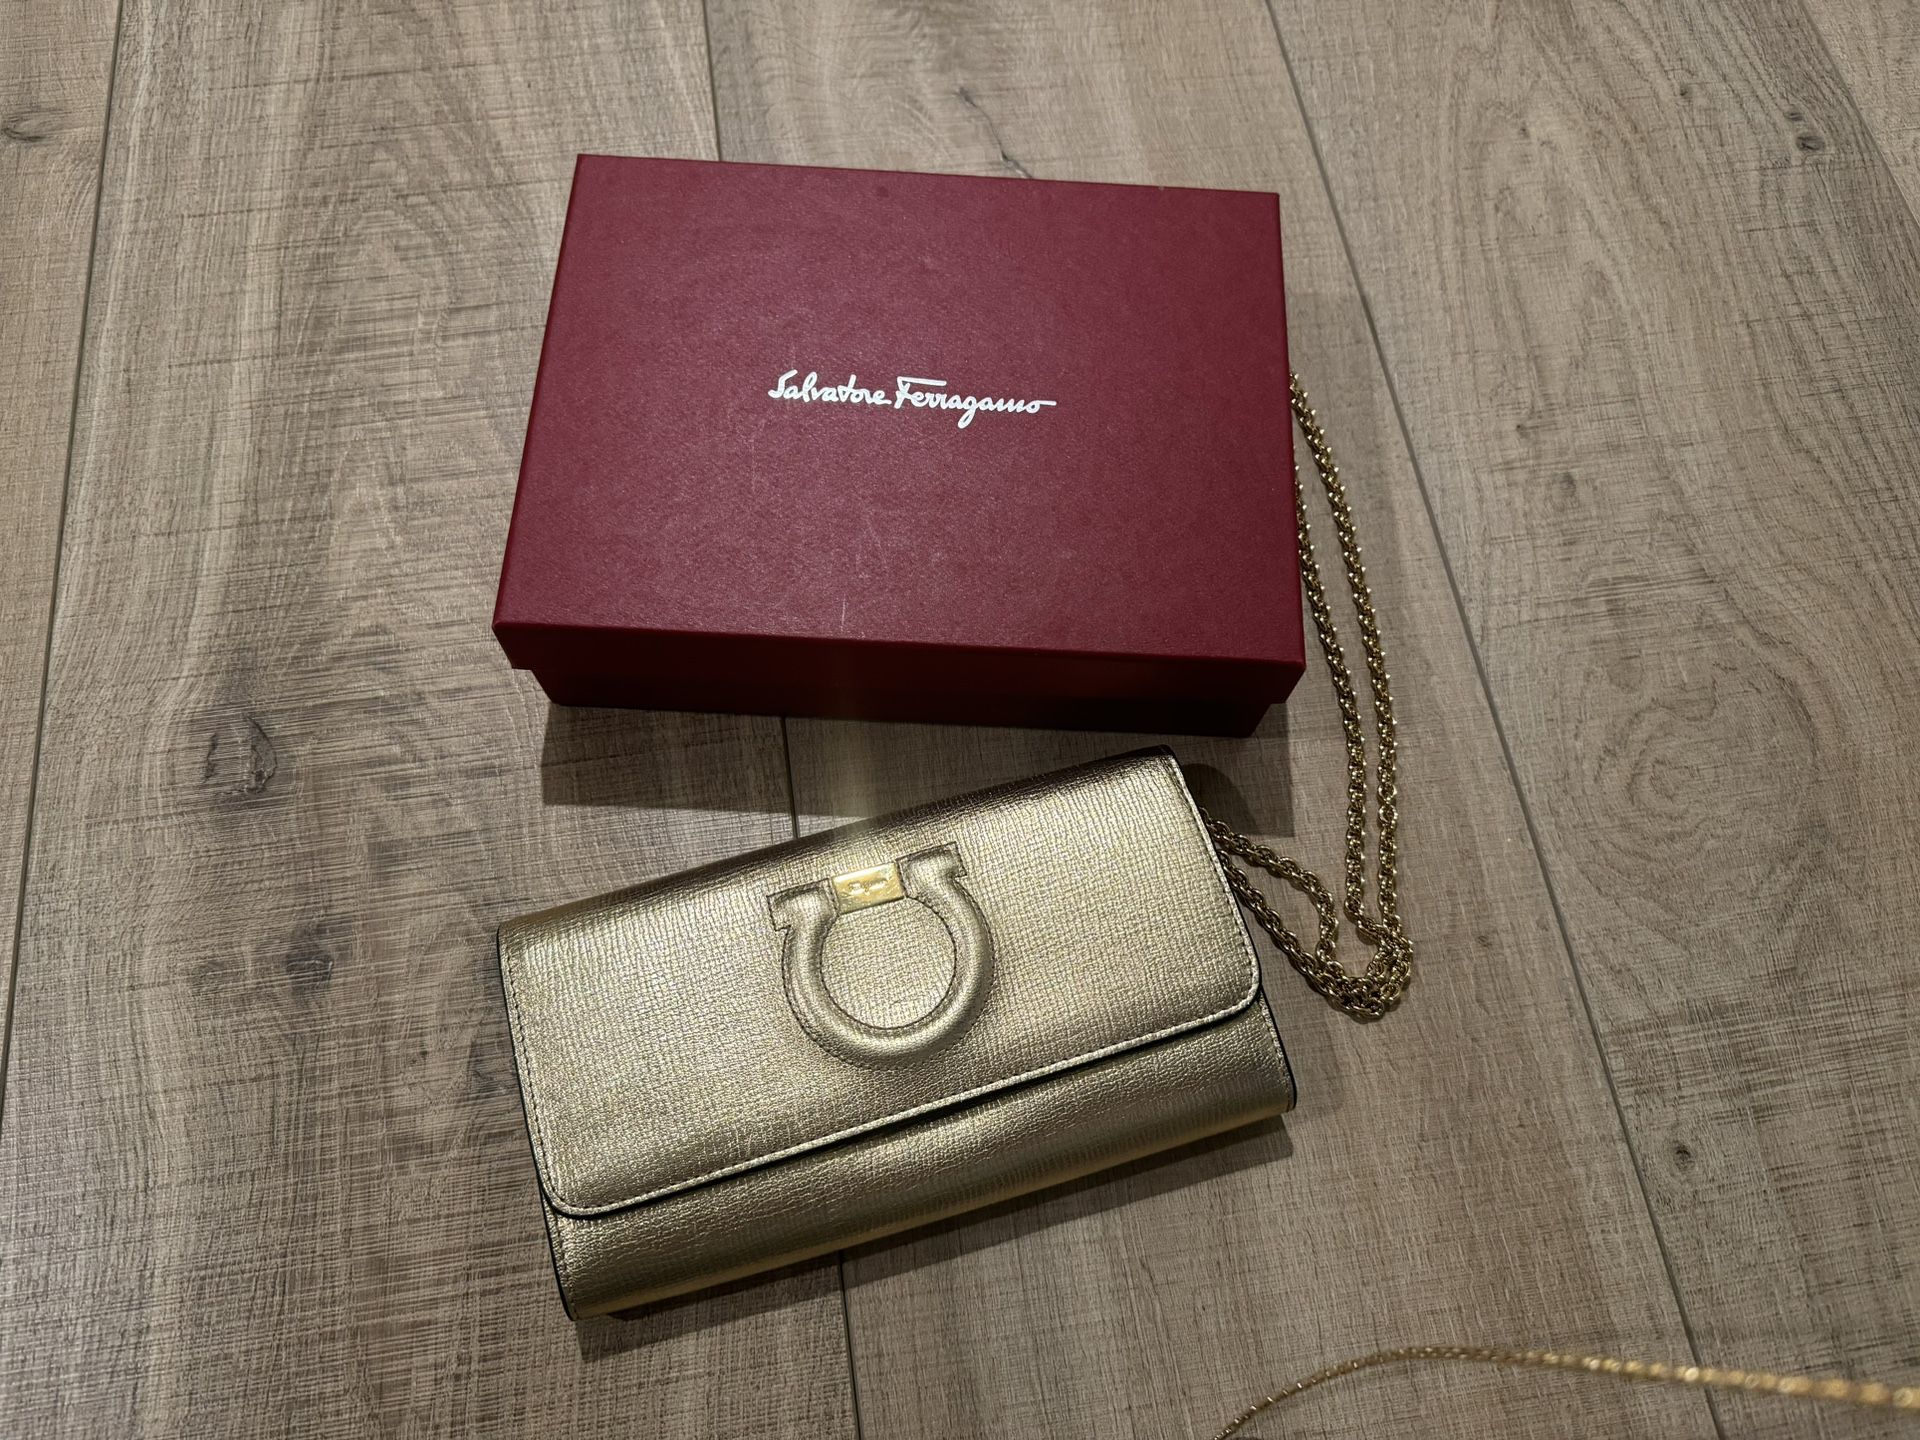 Salvatore Ferragamo Gold Leather Gancini Clutch Wallet Evening Bag Purse Chain